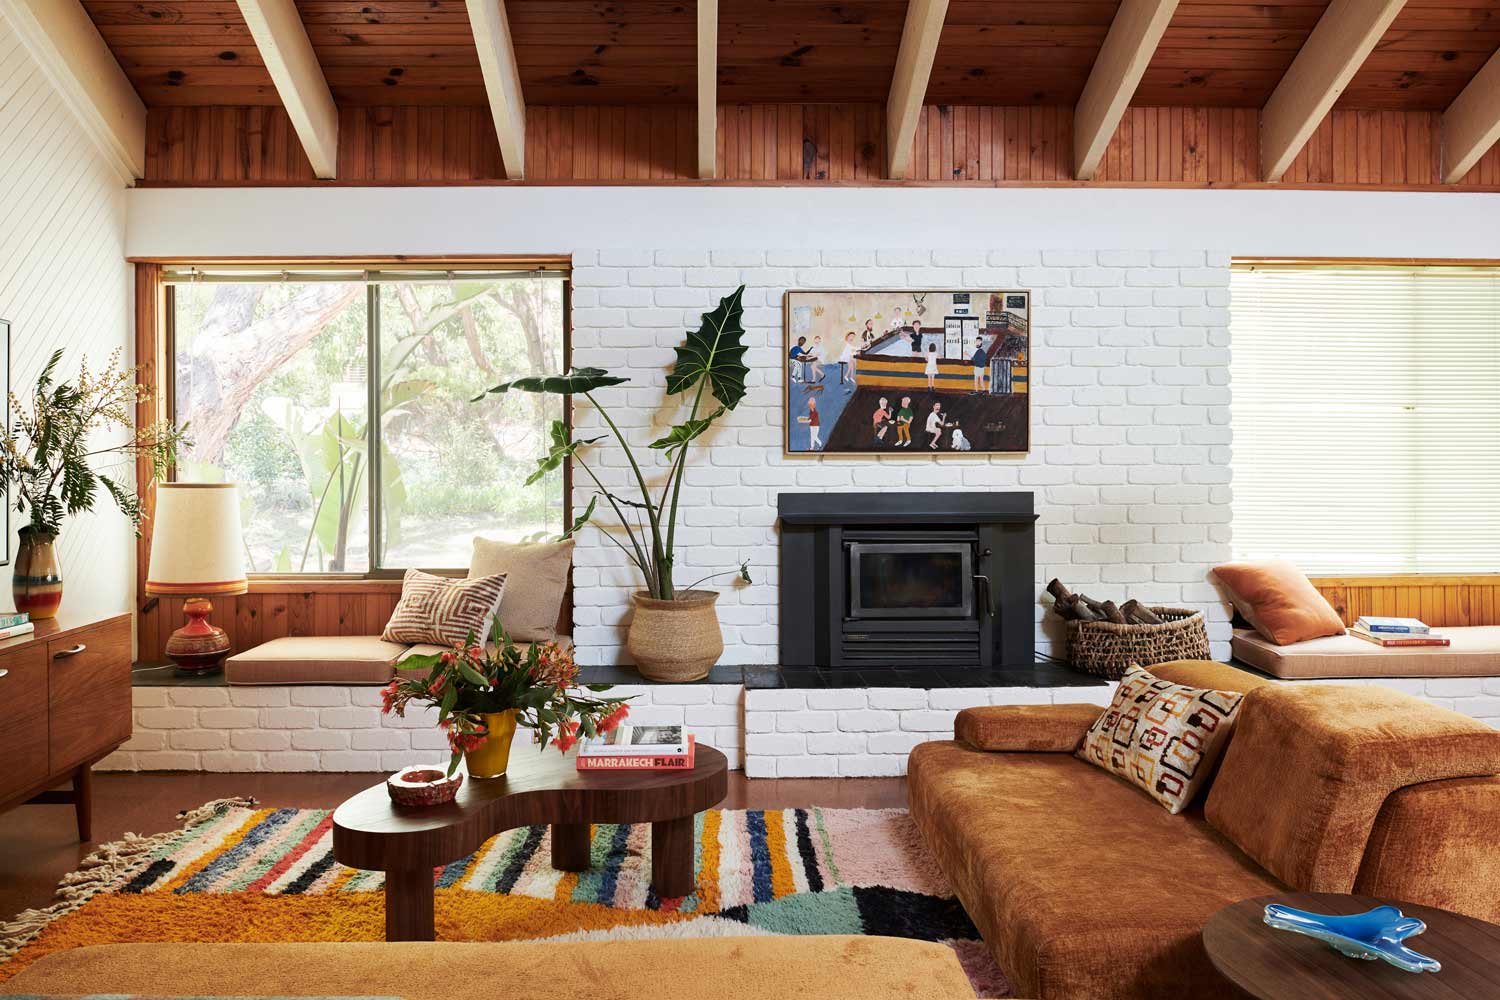 Six stylish ways to update an old home – Fenton & Fenton